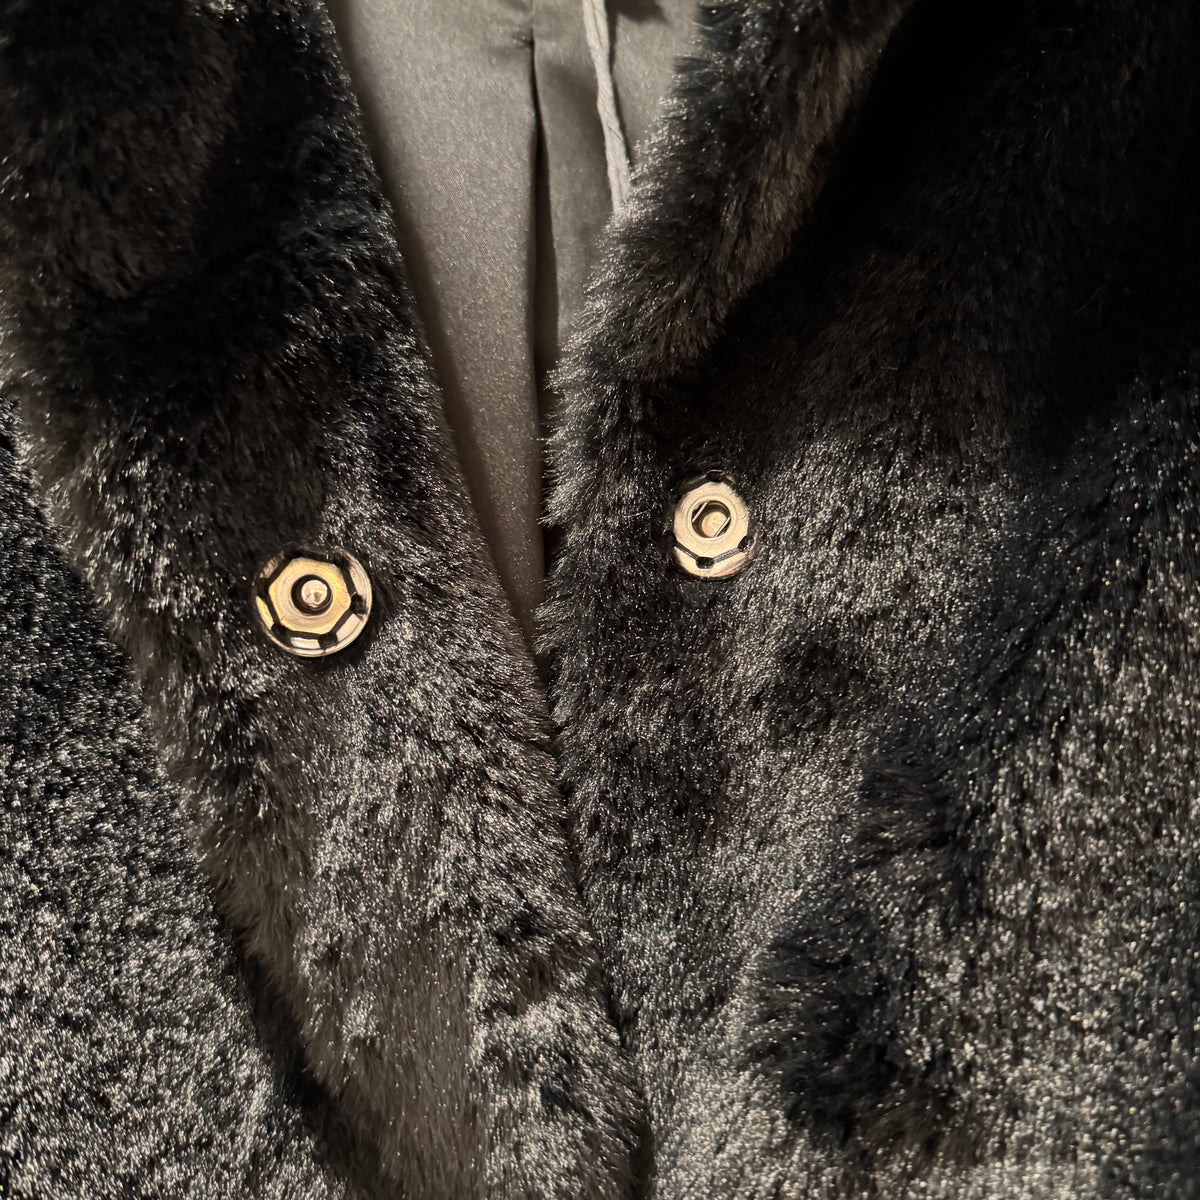 Amazing faux fur coat Black O/S